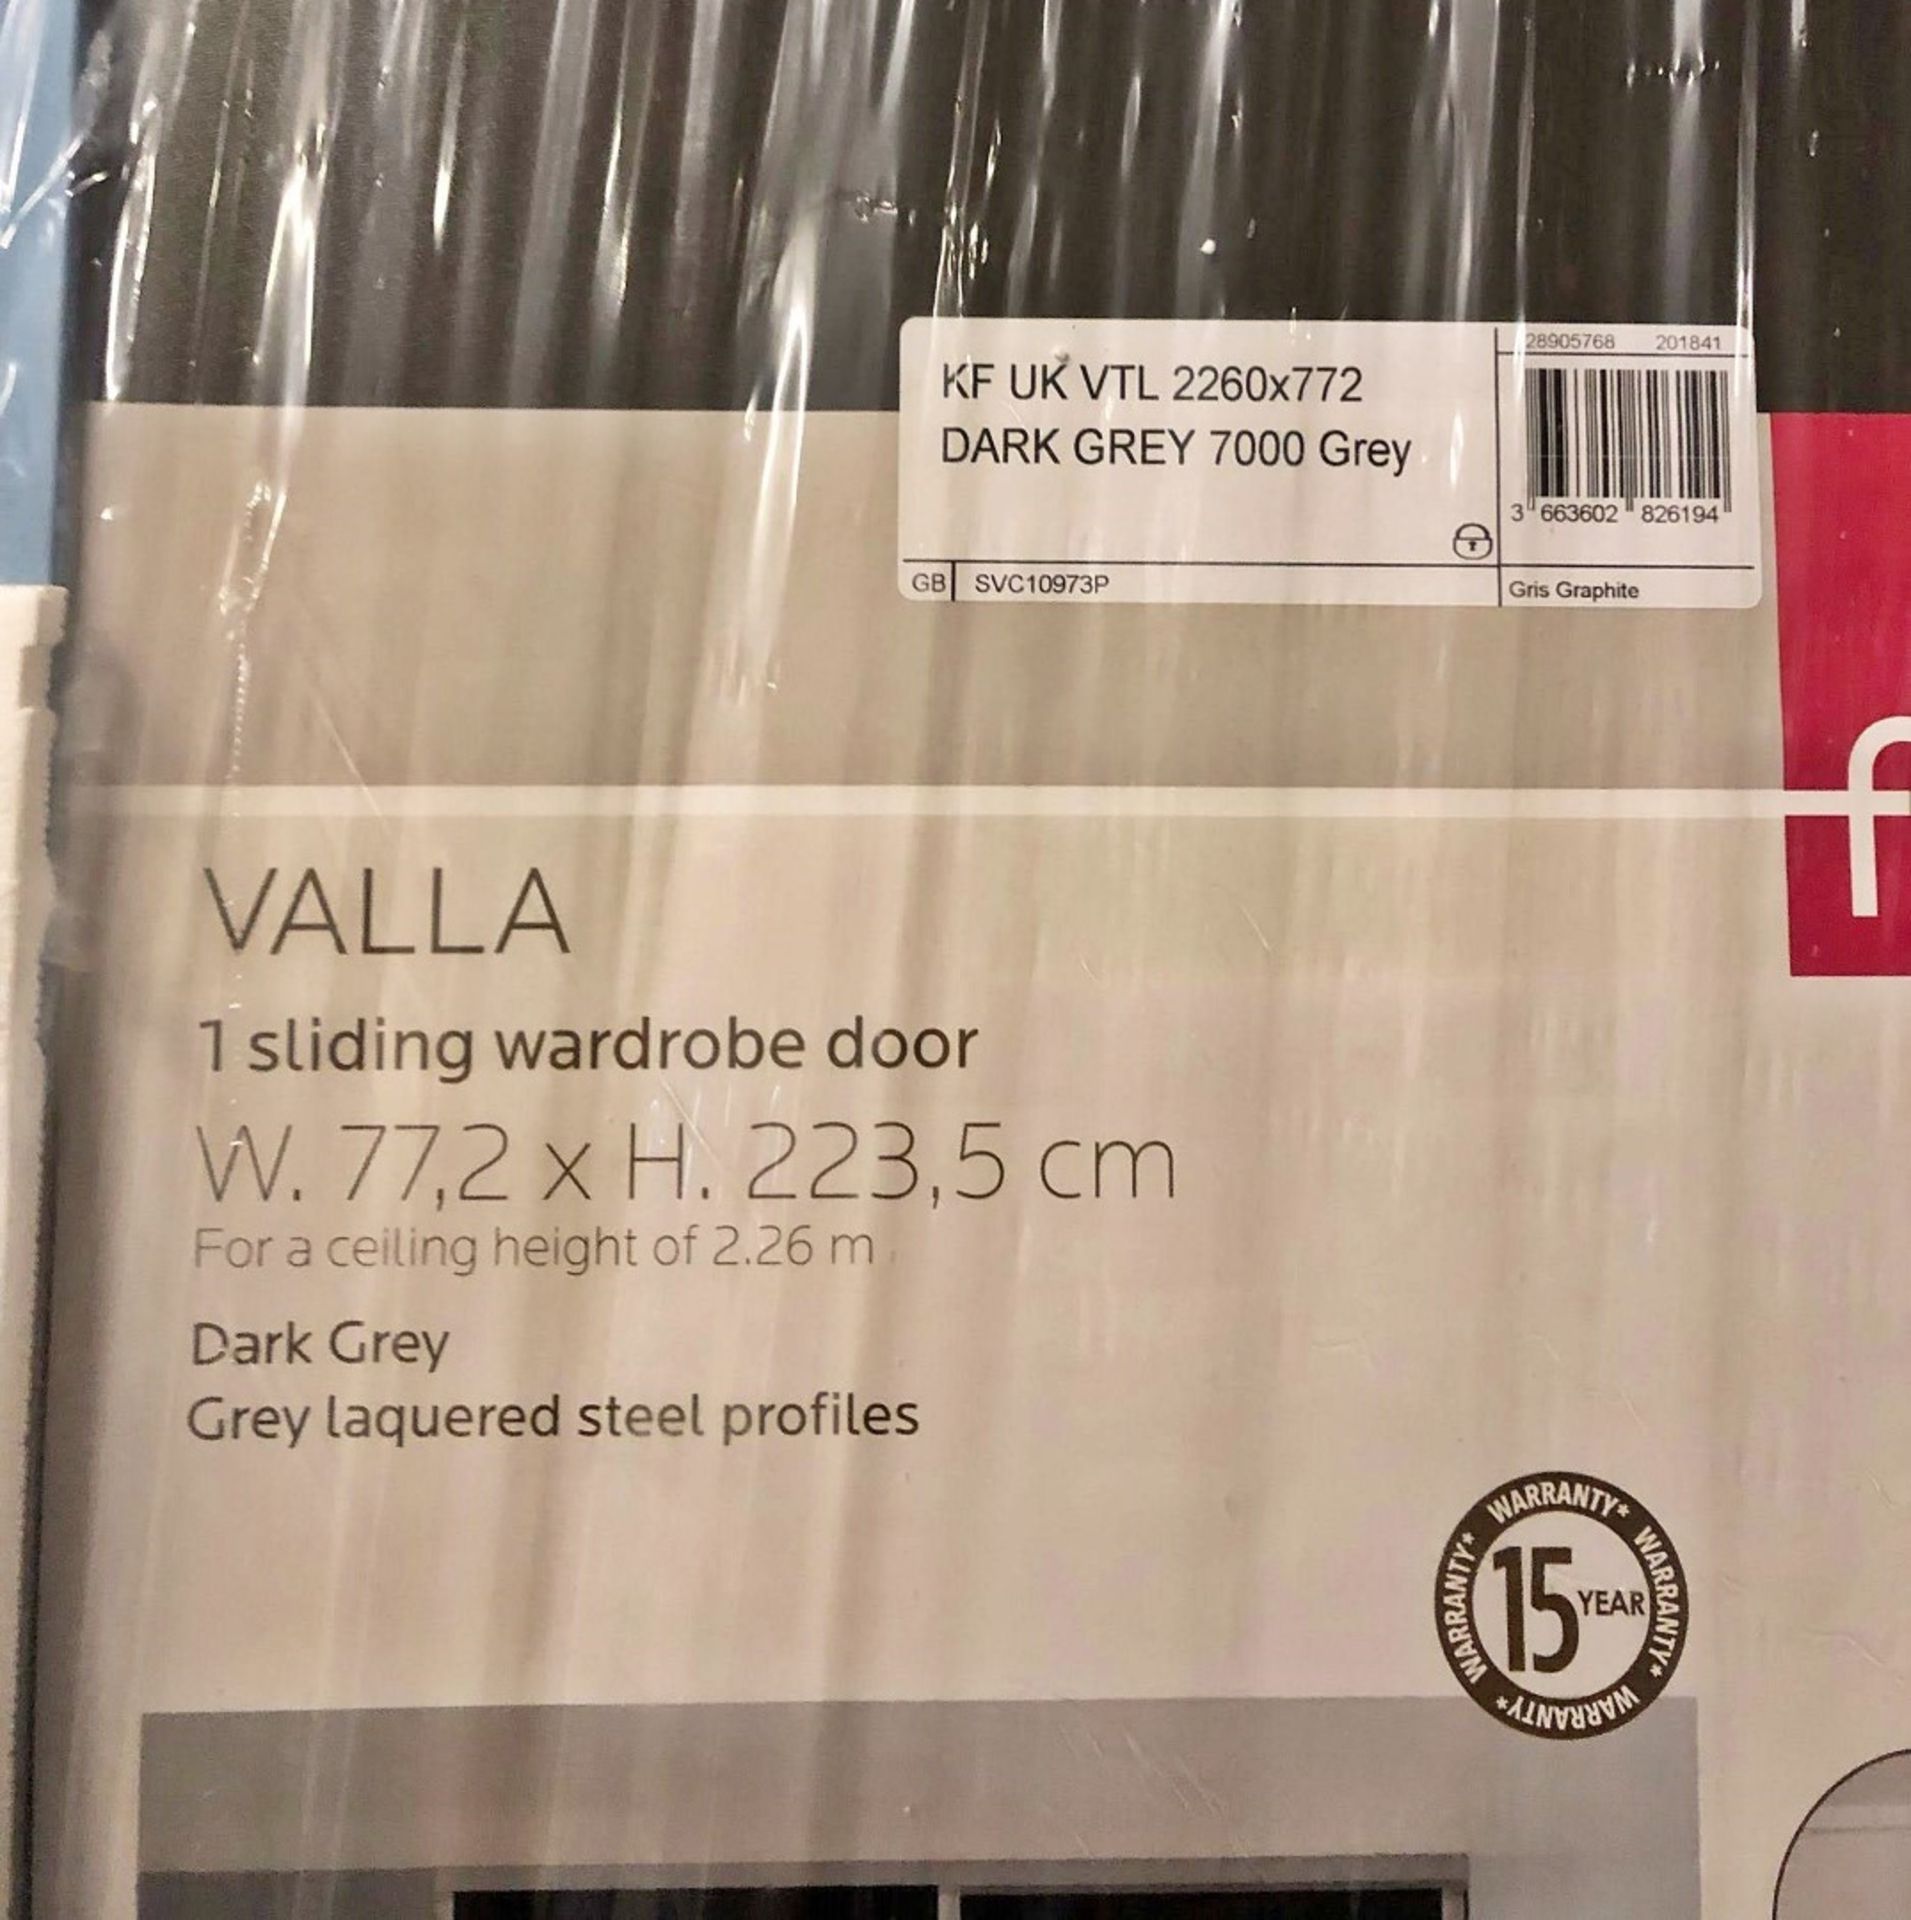 1 x VALLA 1 Sliding Wardrobe Door In Dark Grey With Grey Lacquered Steel Profiles - CL373 - Ref: NC2 - Bild 6 aus 6